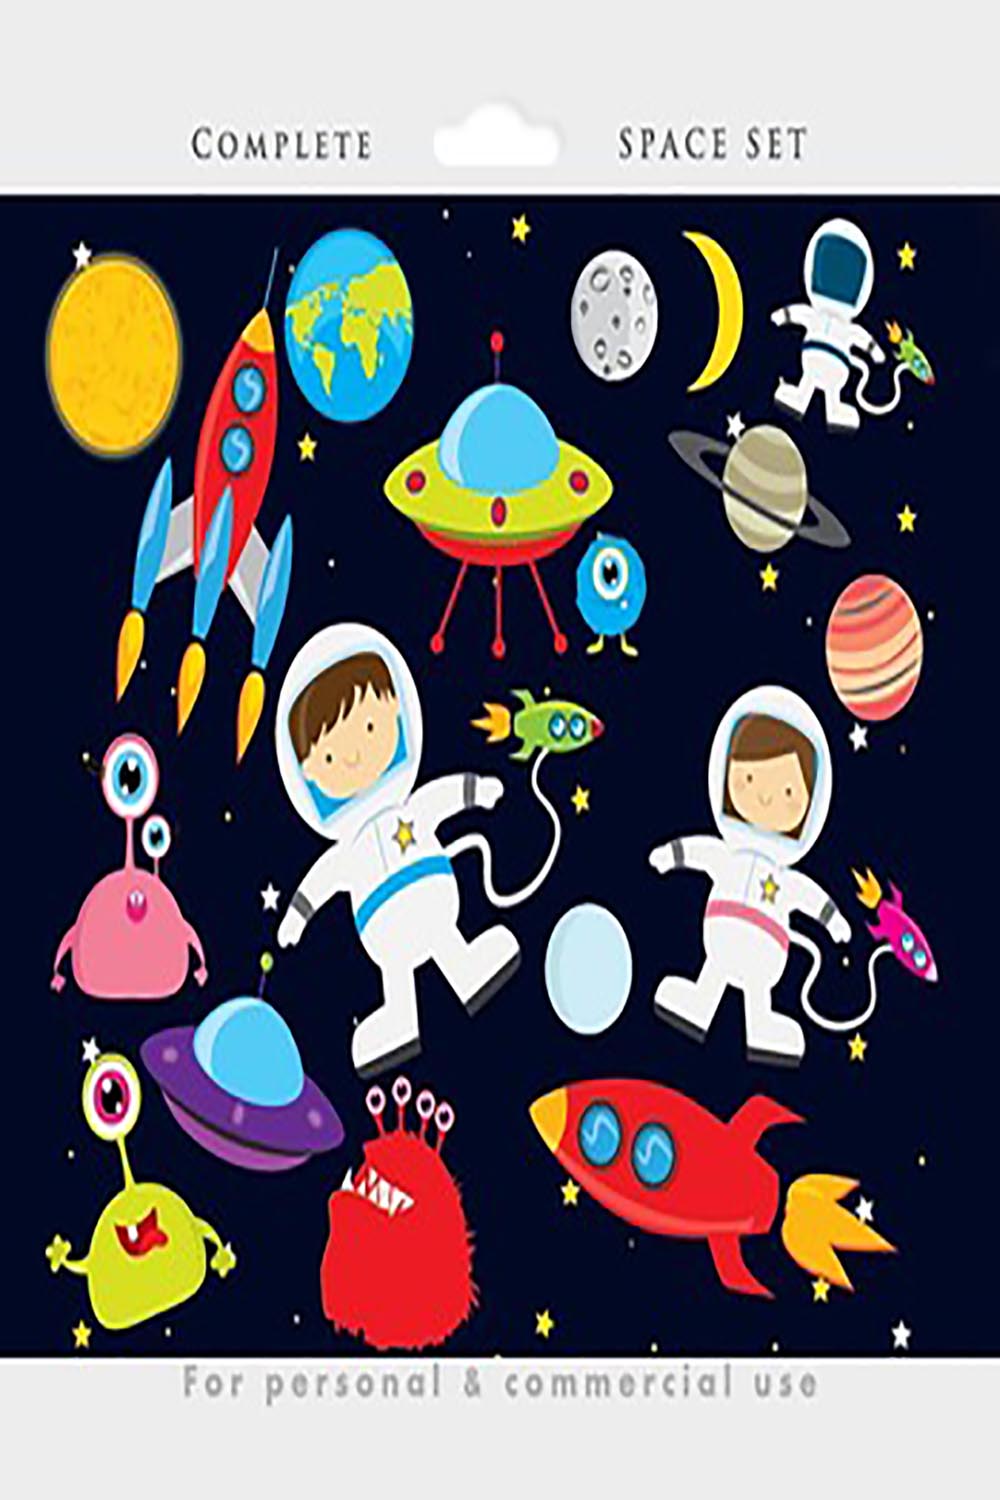 Space clipart - astronaut clip art, UFOs, aliens, spaceship, rocket, planets pinterest preview image.